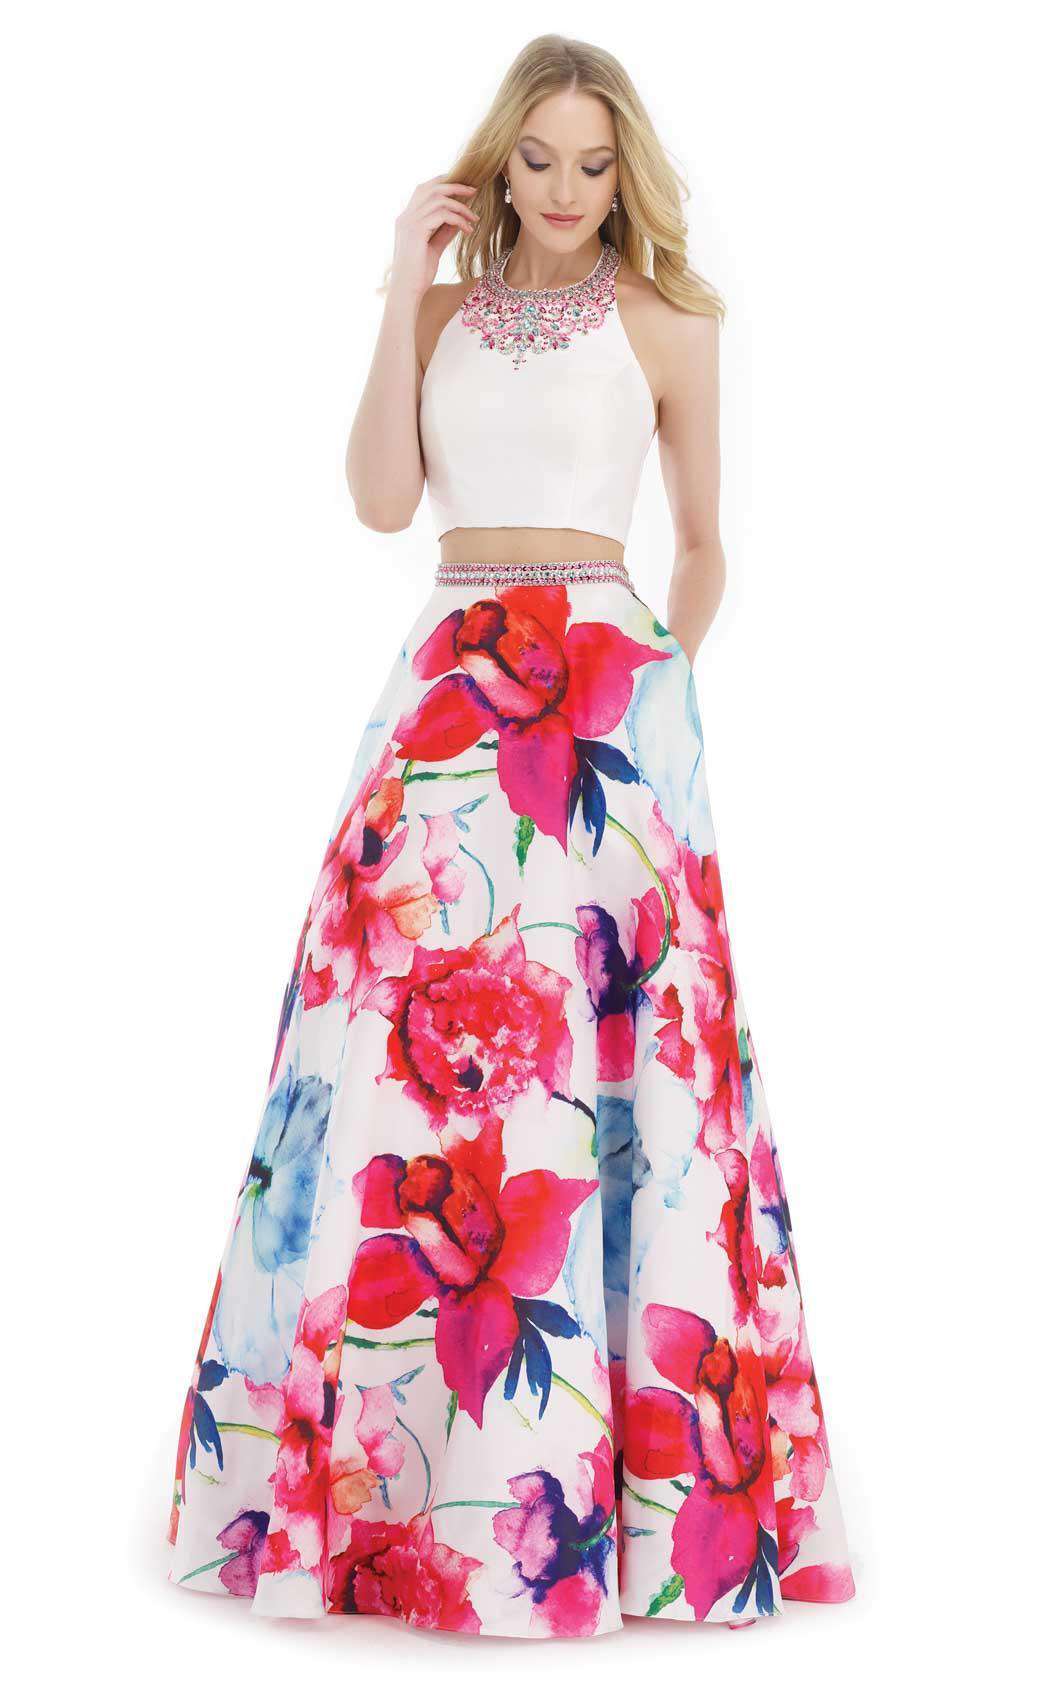 Morrell Maxie 15460 Dress | Buy Designer Gowns & Evening Dresses ...